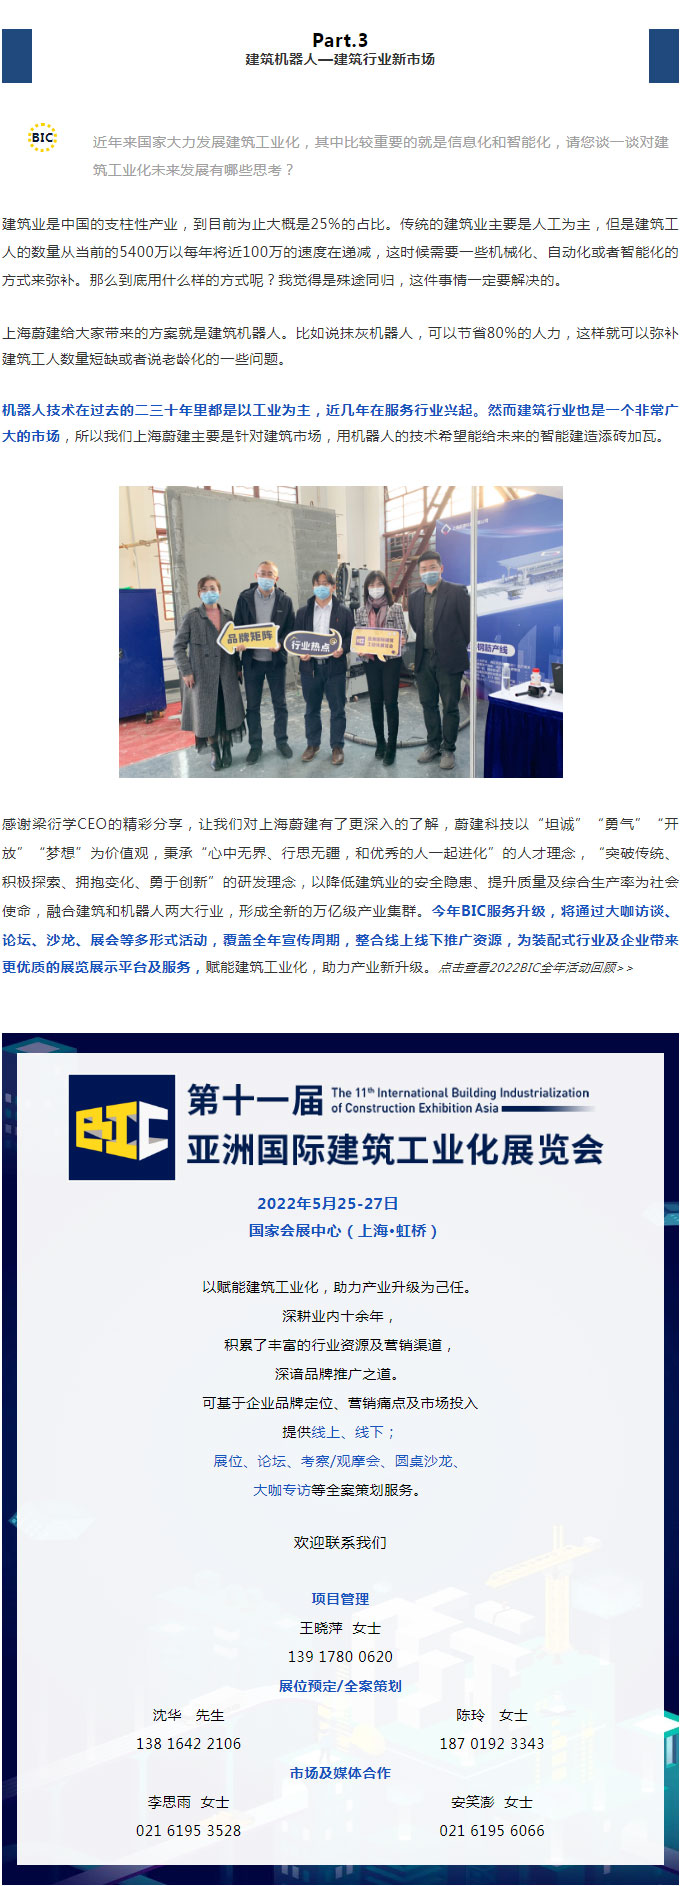 BIC专访 | 上海蔚建科技有限公司CEO 梁衍学